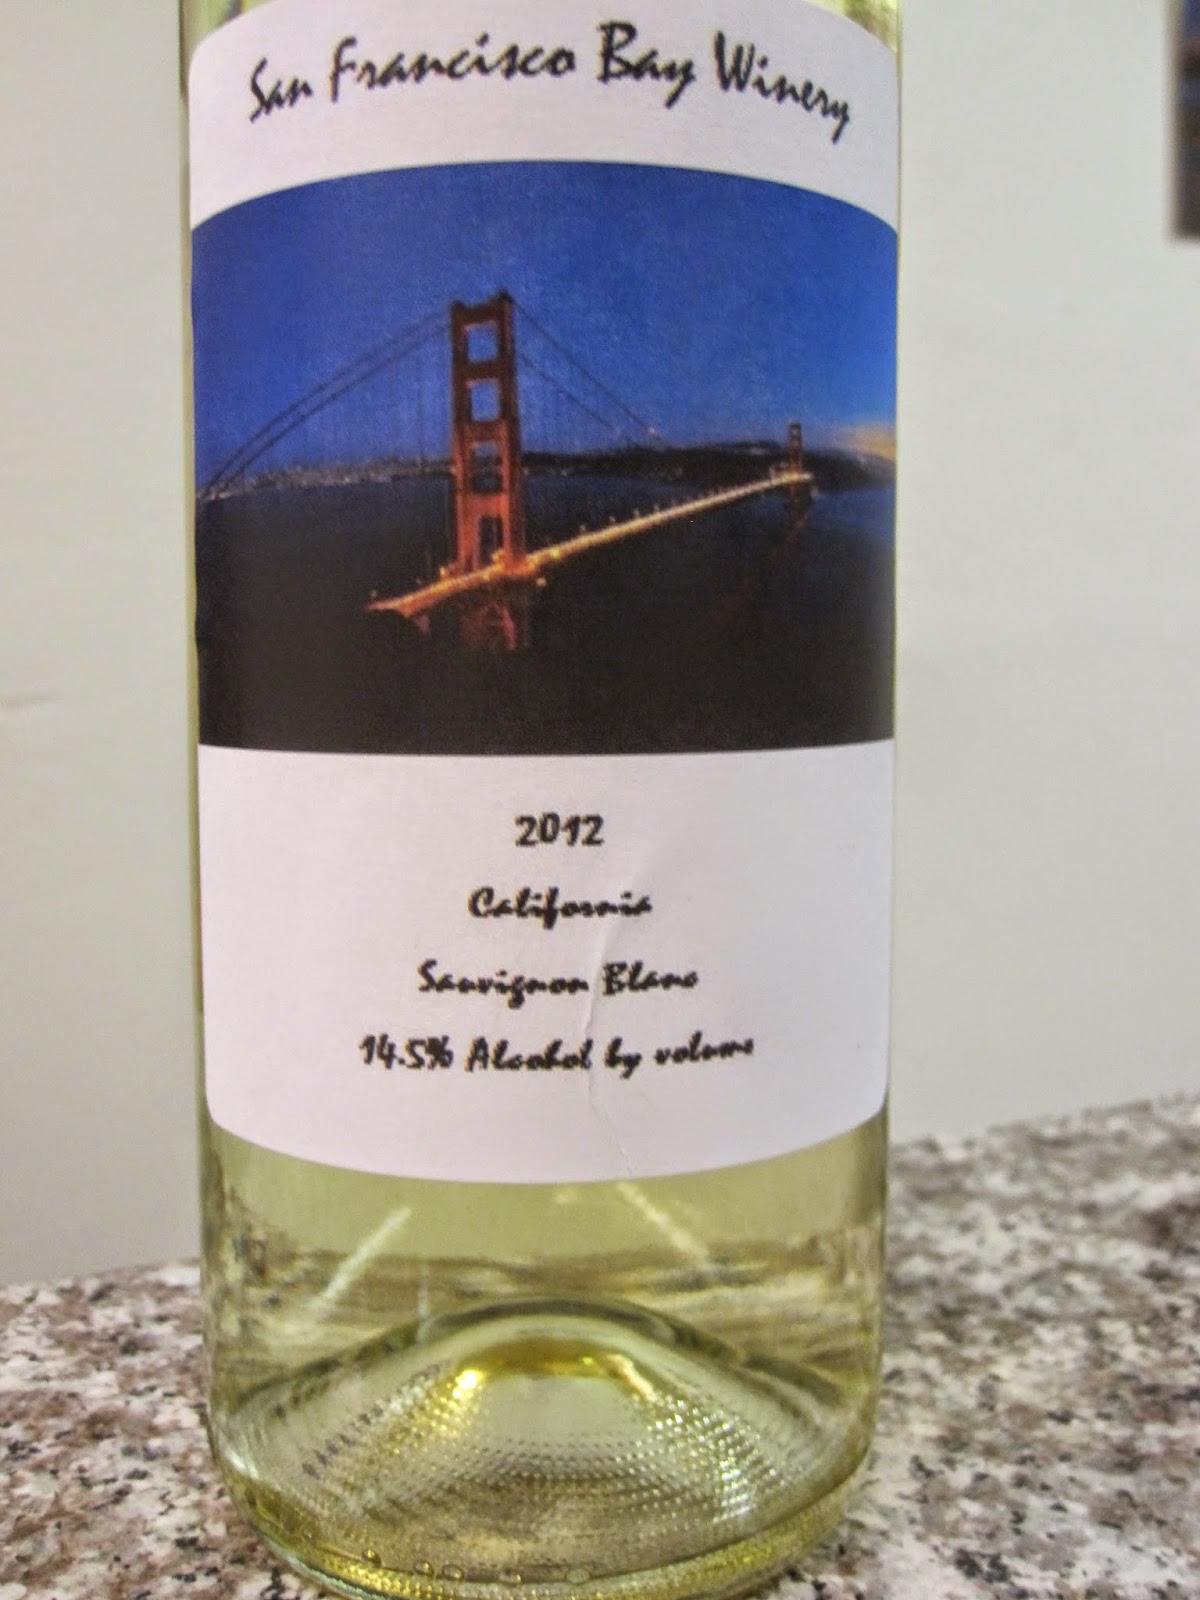 The San Francisco Bay Winery